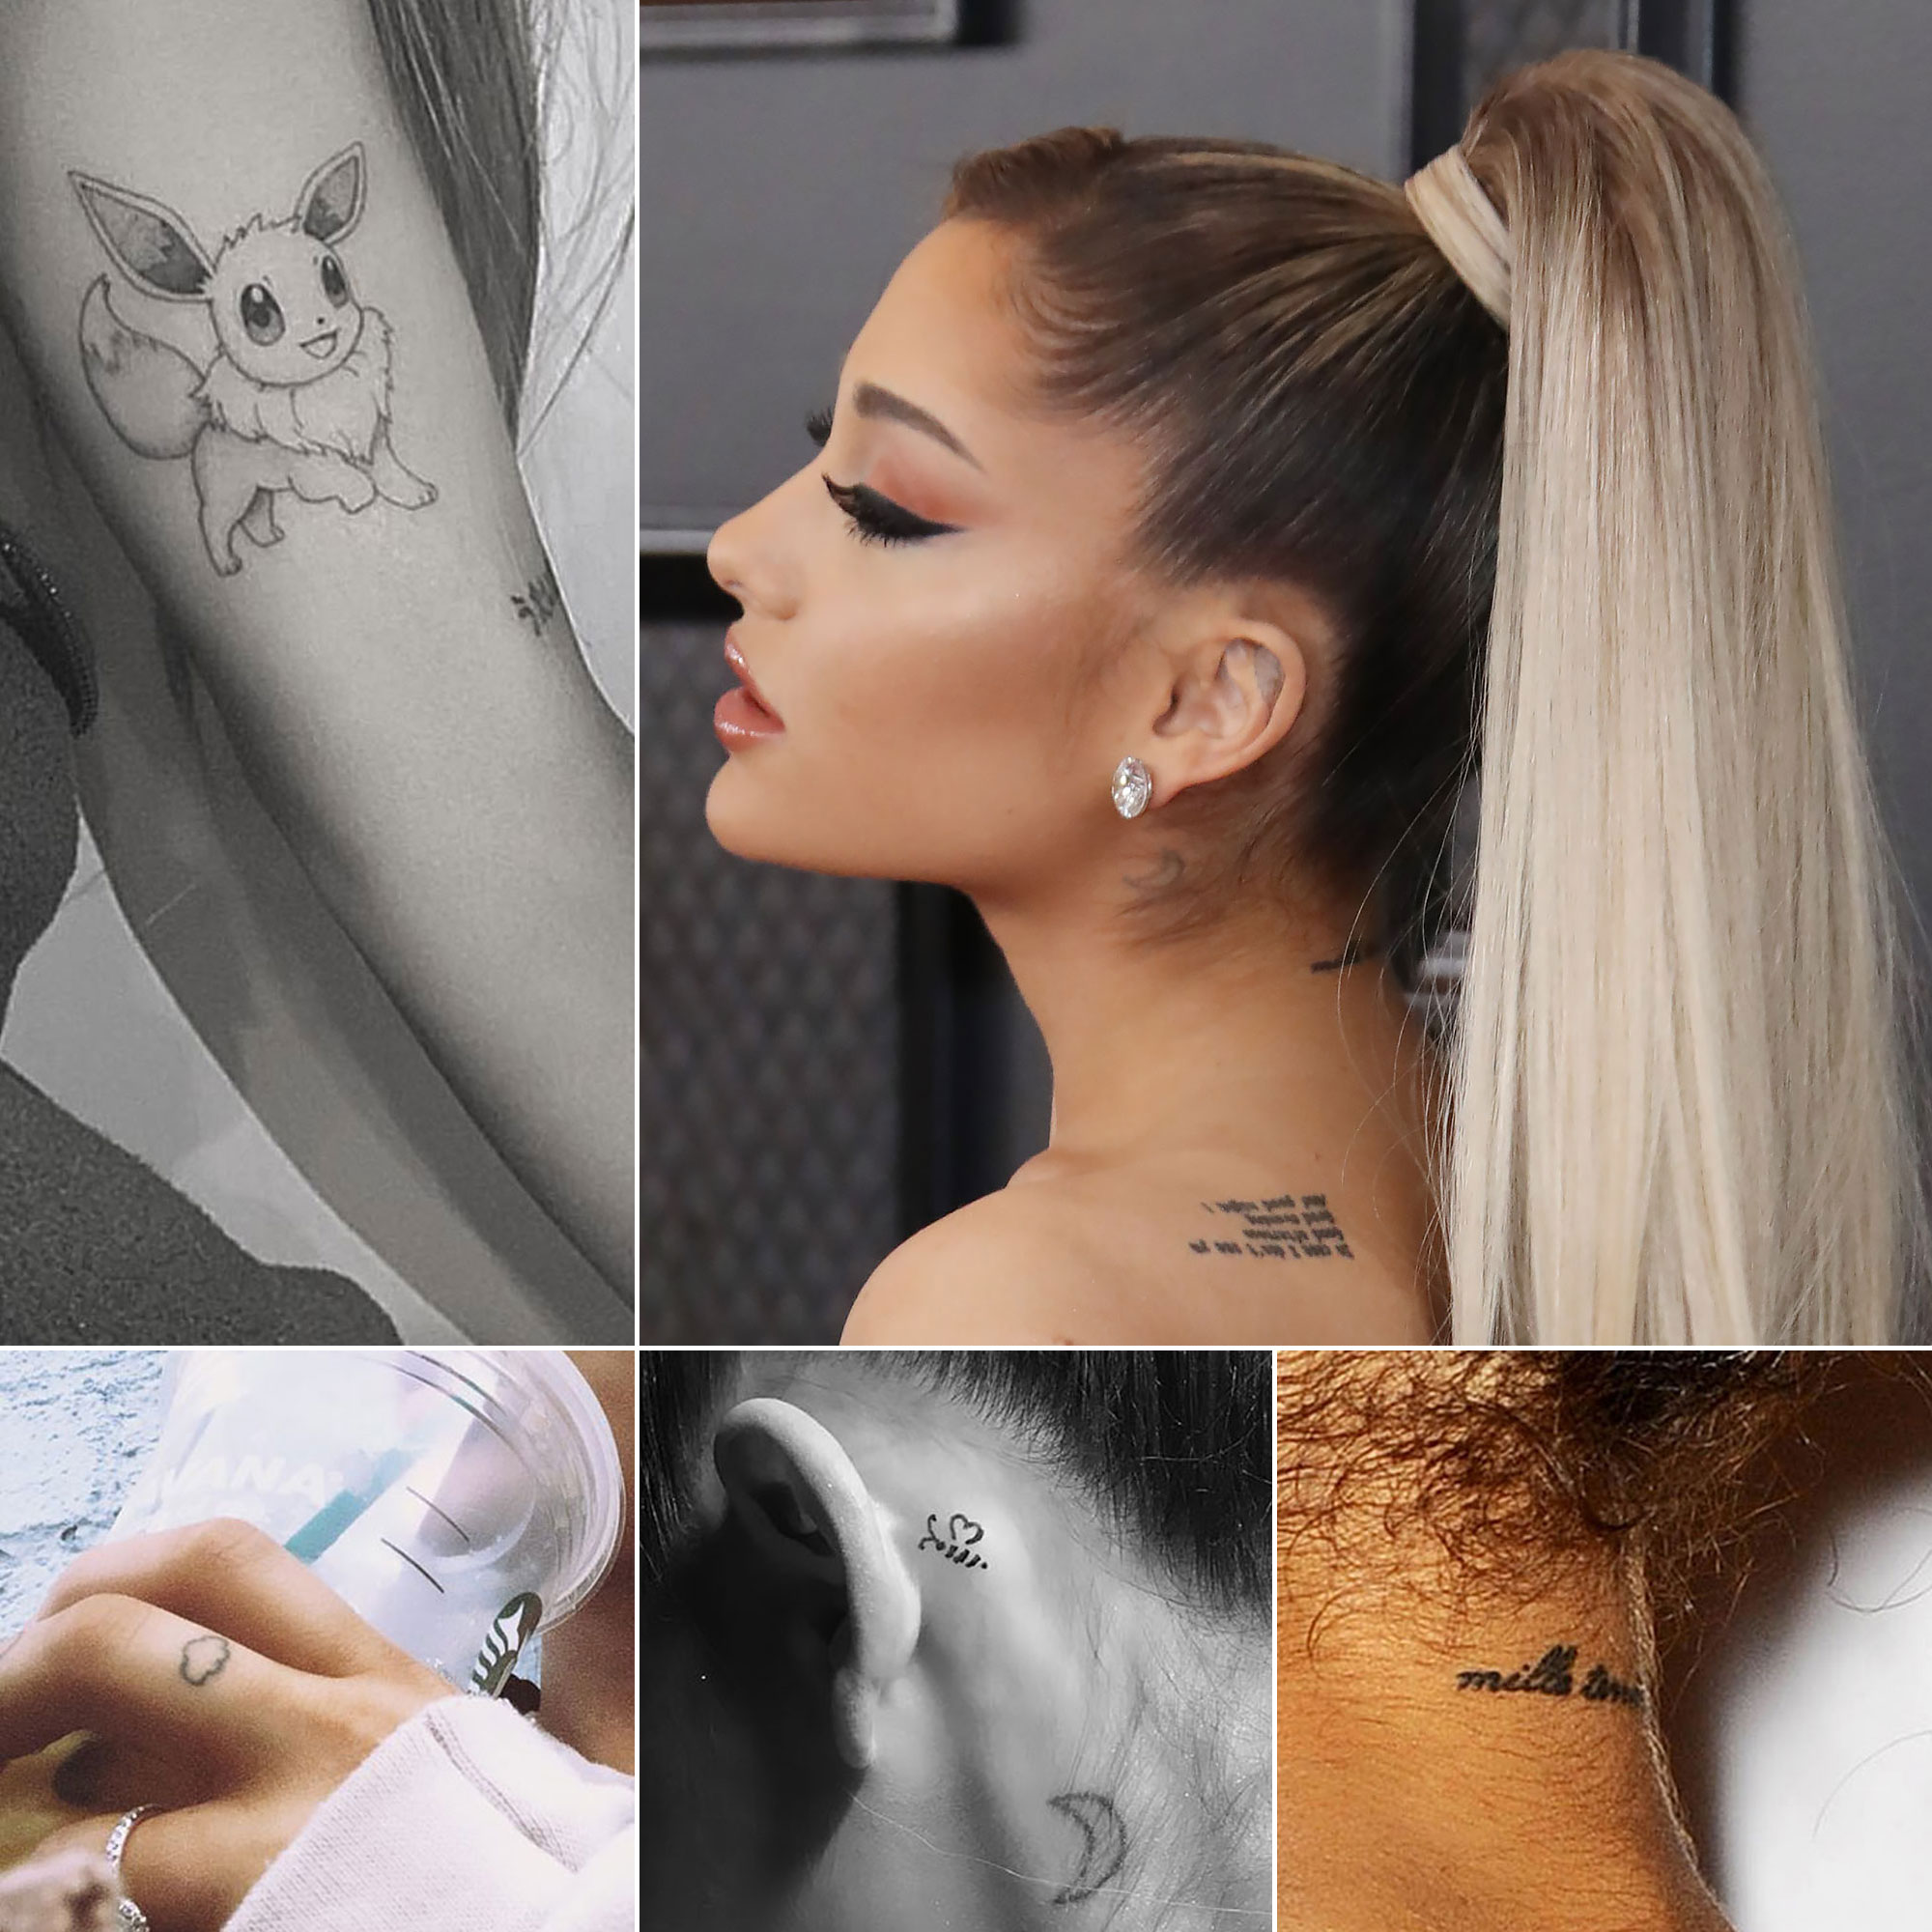 Grande Instagram Post | Ariana Grande's 